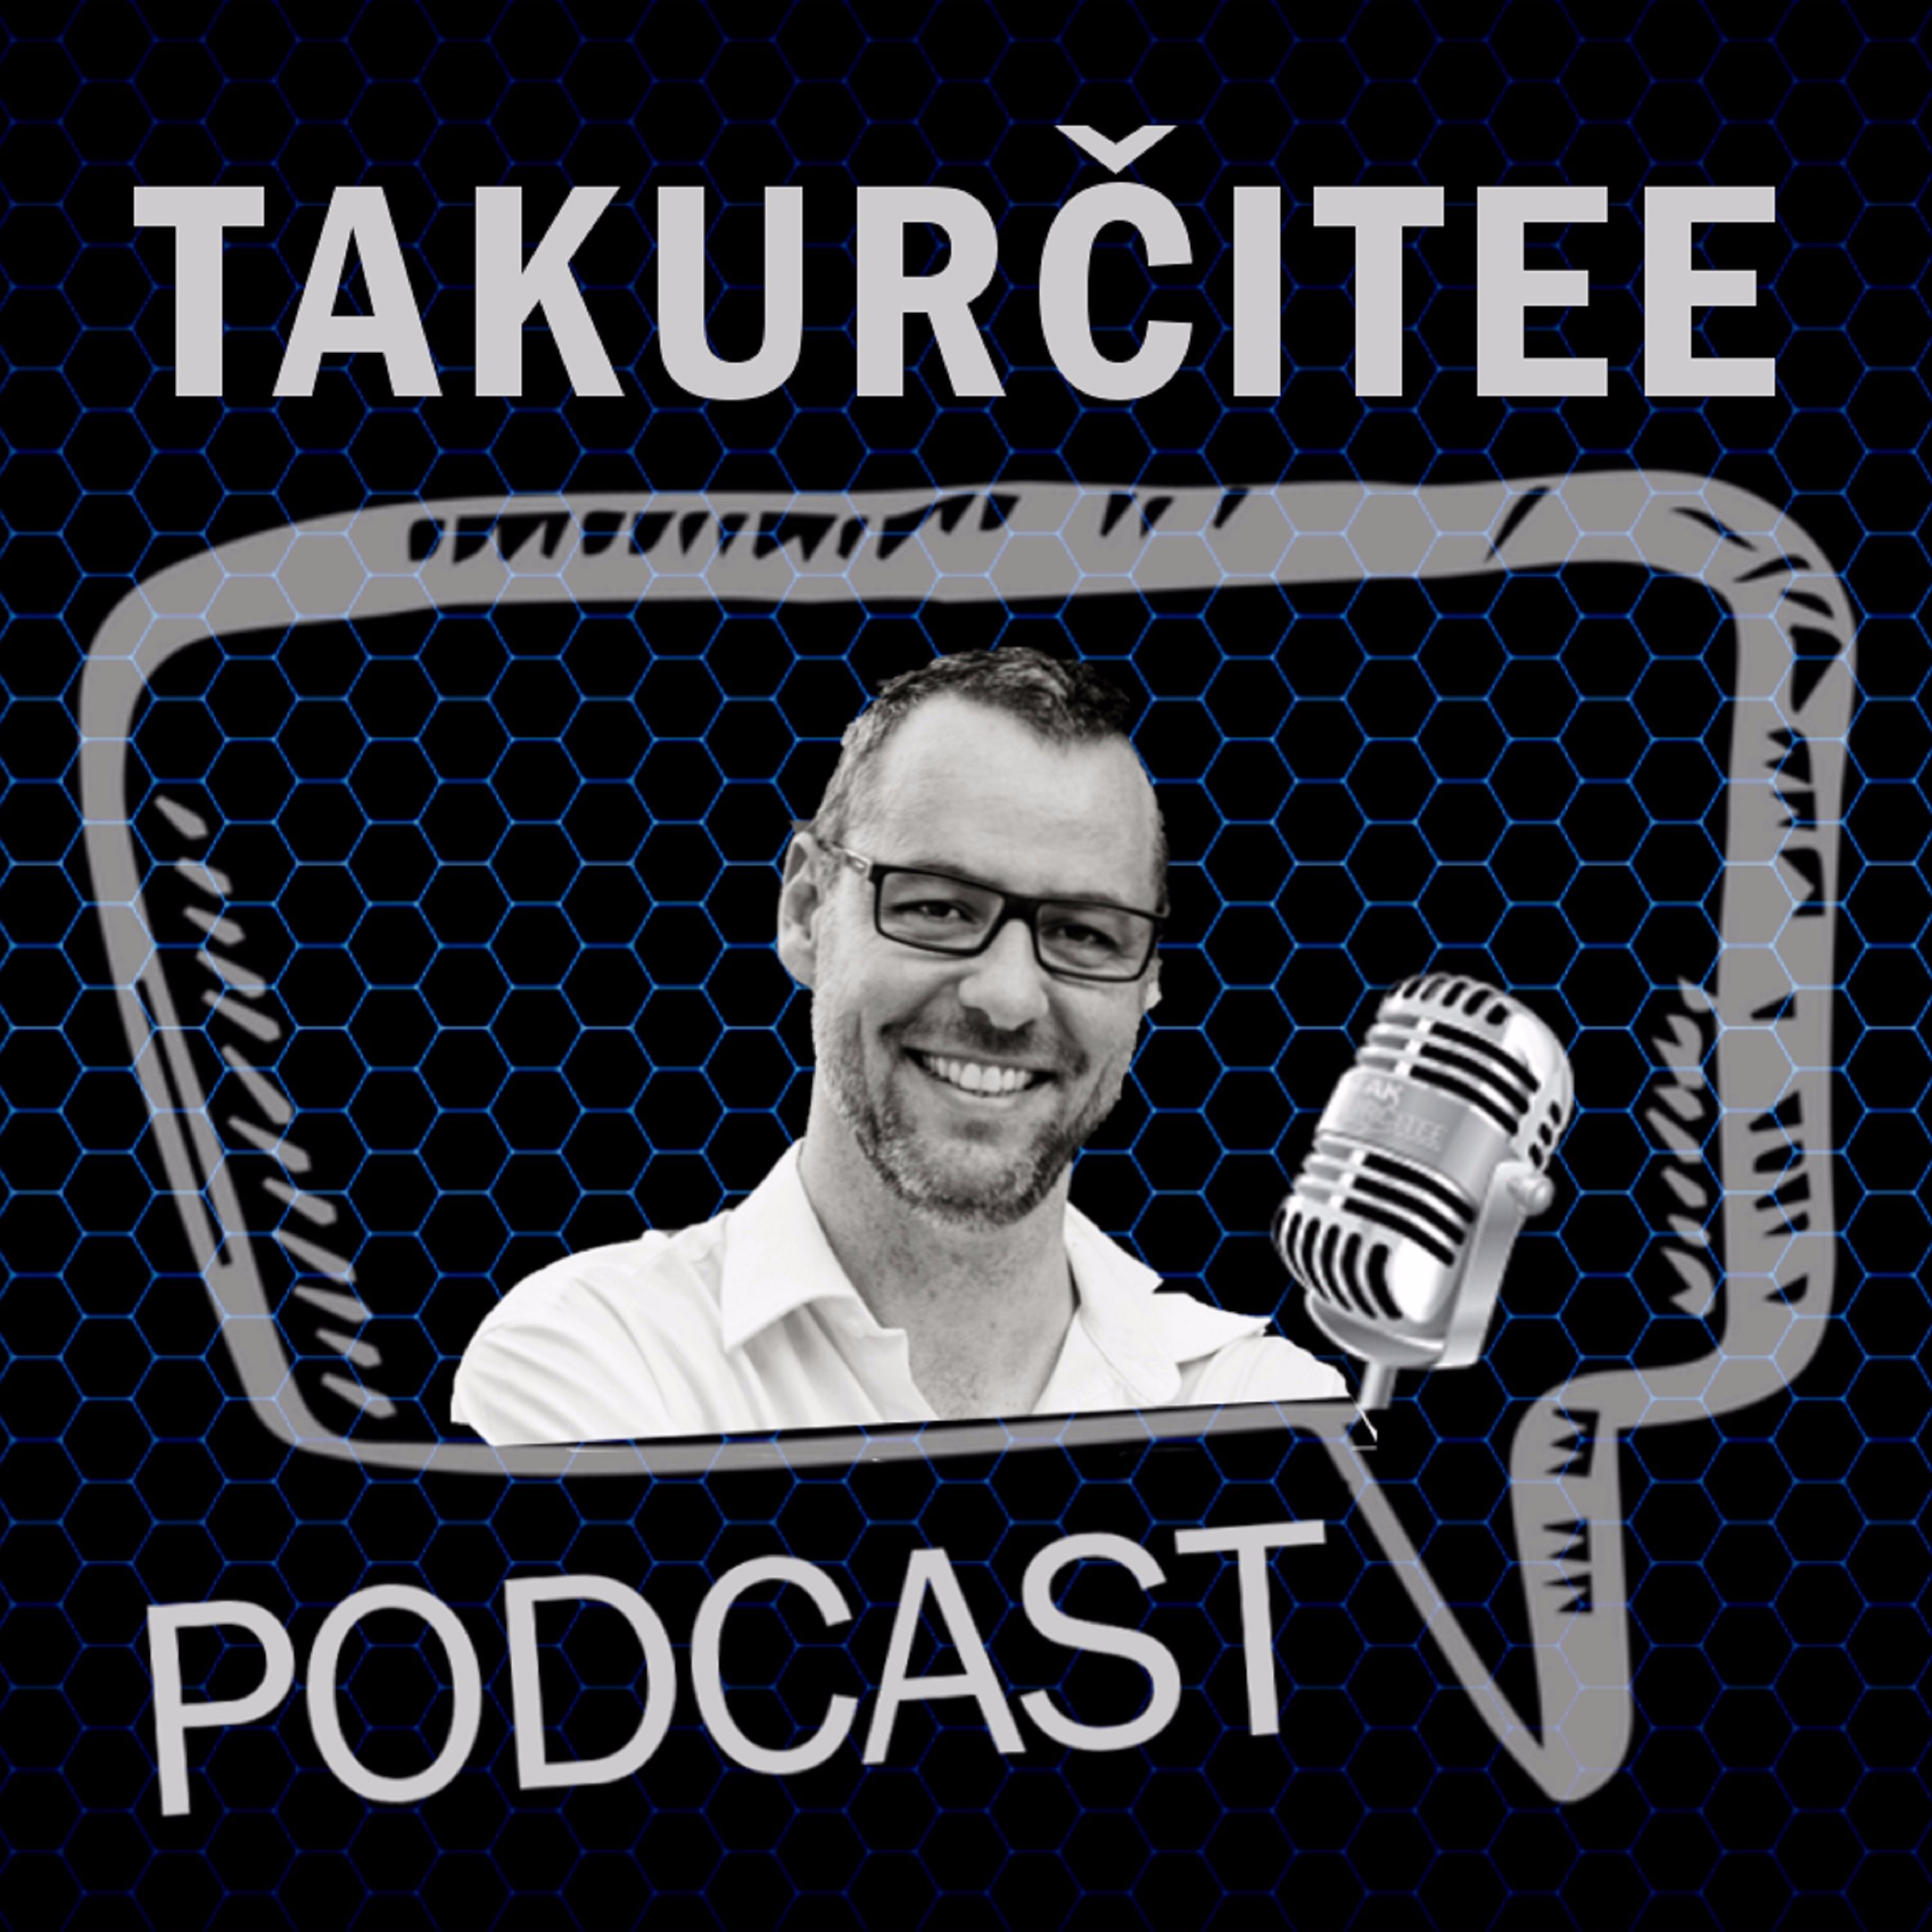 TakUrčitee Podcast, Ep. 8: Lintnerliga playoff preview